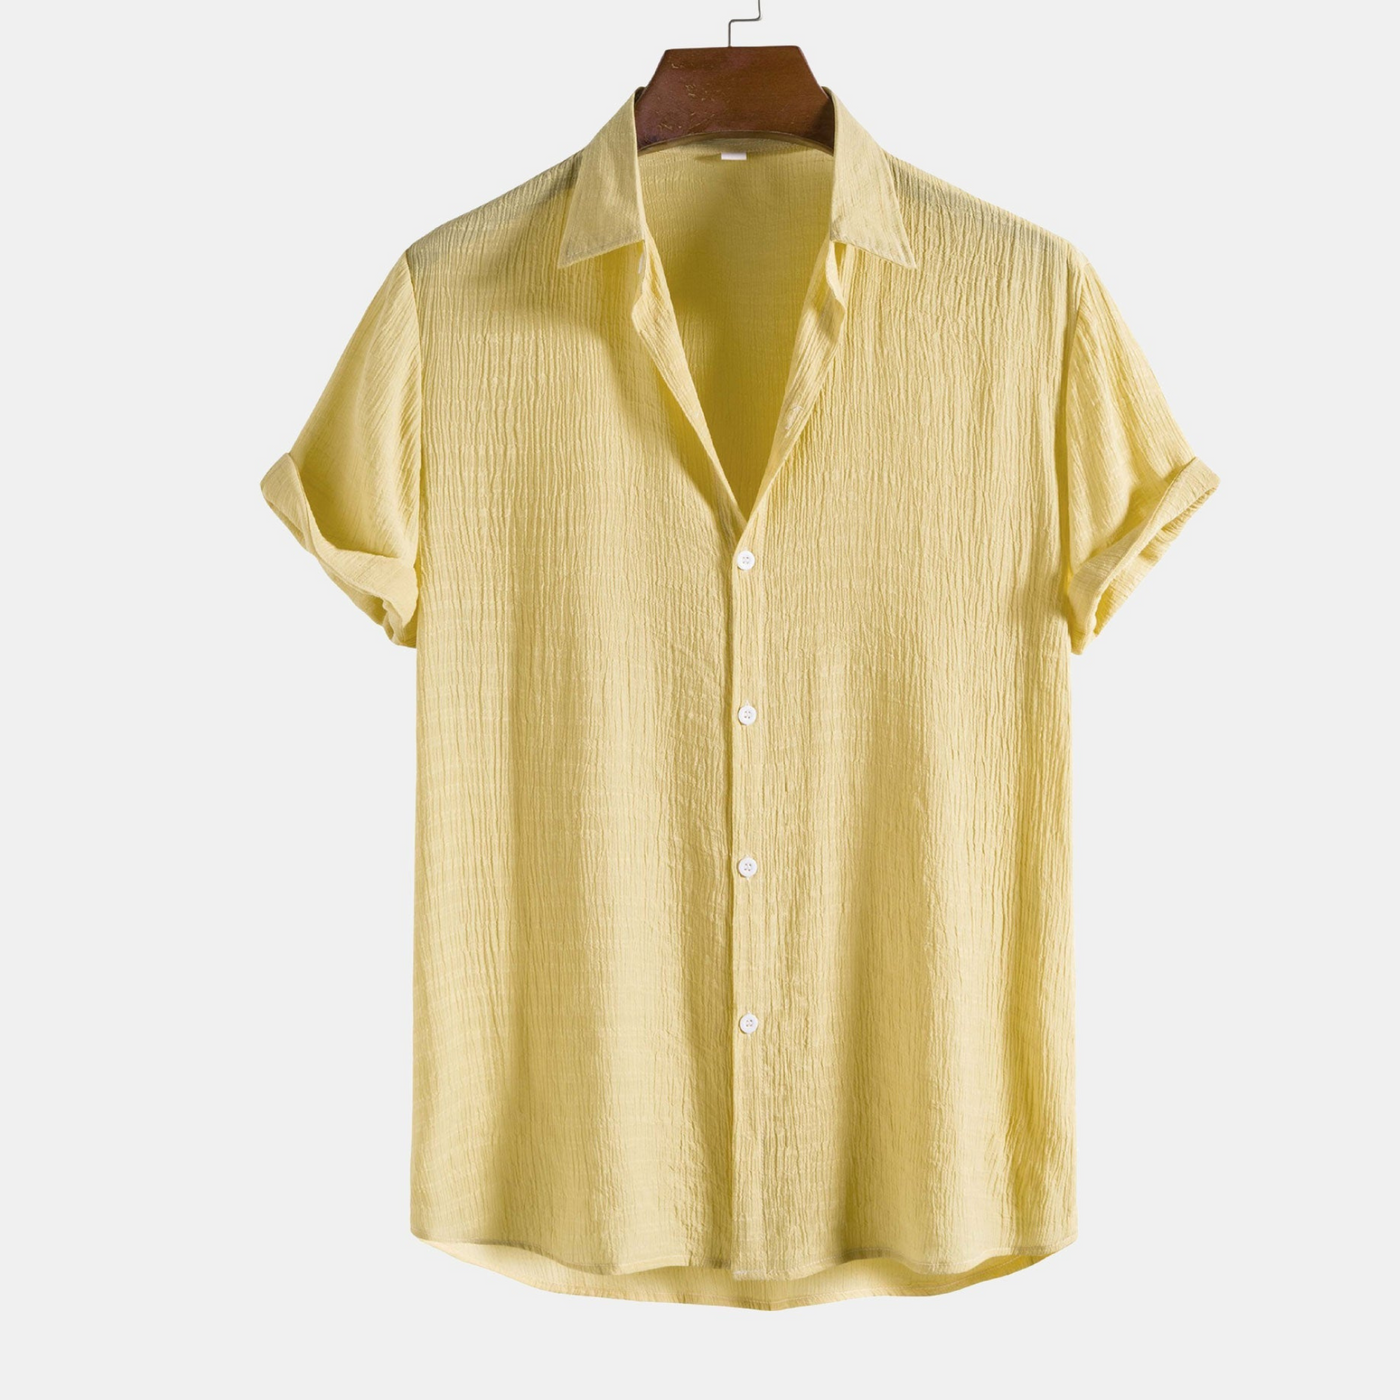 Short-Sleeve Shirt Made of Textured Fabric